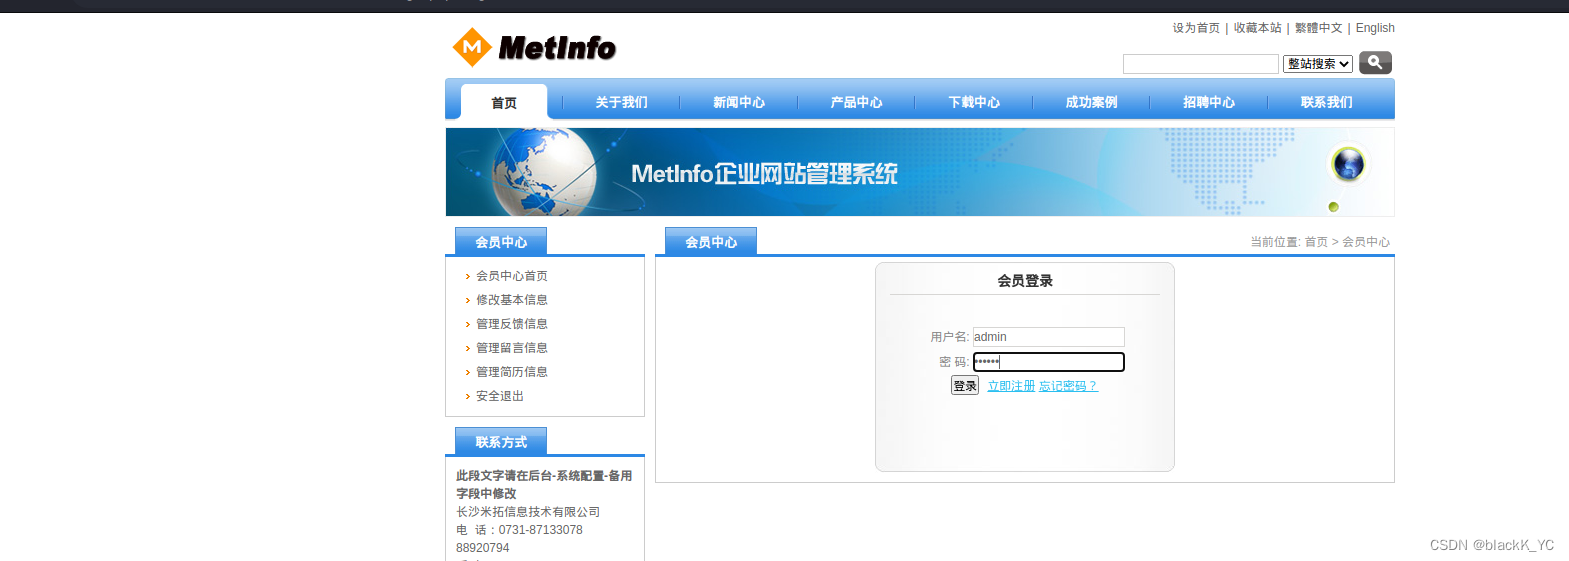 Metinfo4.0逻辑漏洞